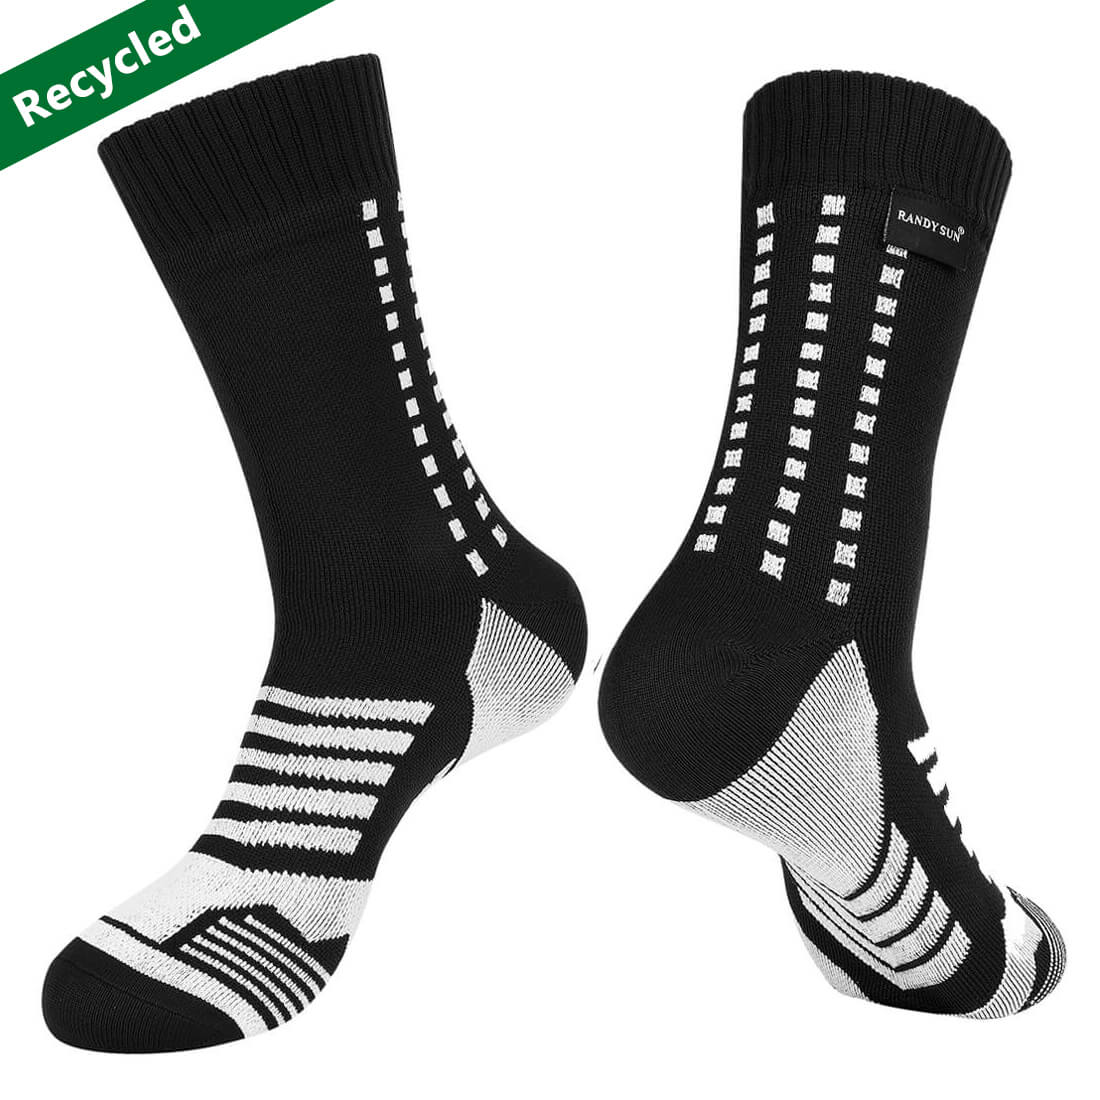 Randy Sun 100% Waterproof Unisex Hiking Socks